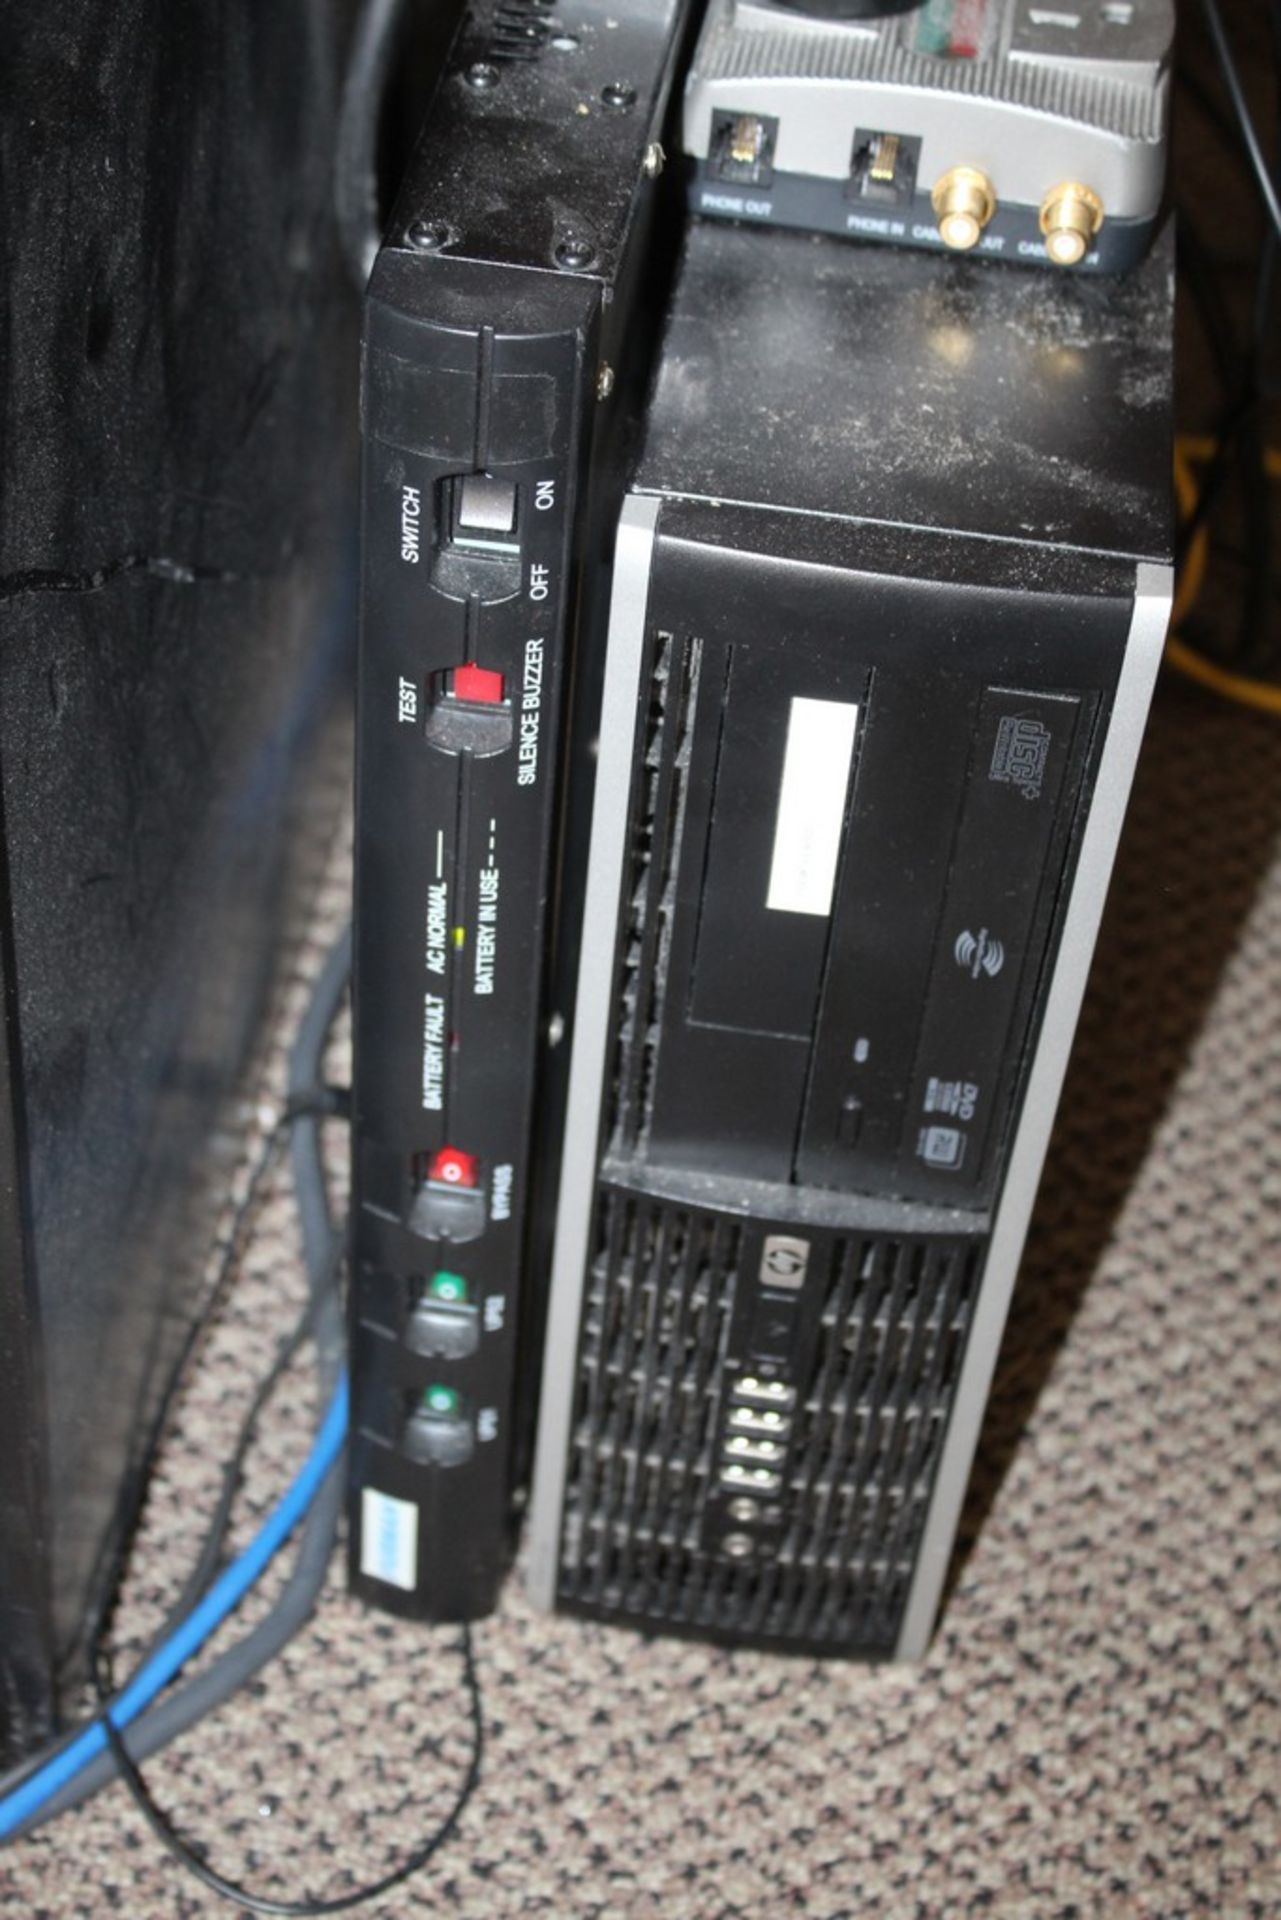 HP COMPAQ COMPUTER WITH LG 23" FLATSCREEN MONITOR, KEYBOARD, MOUSE WITH FURMAN BATTERY BACKUP - Image 2 of 2